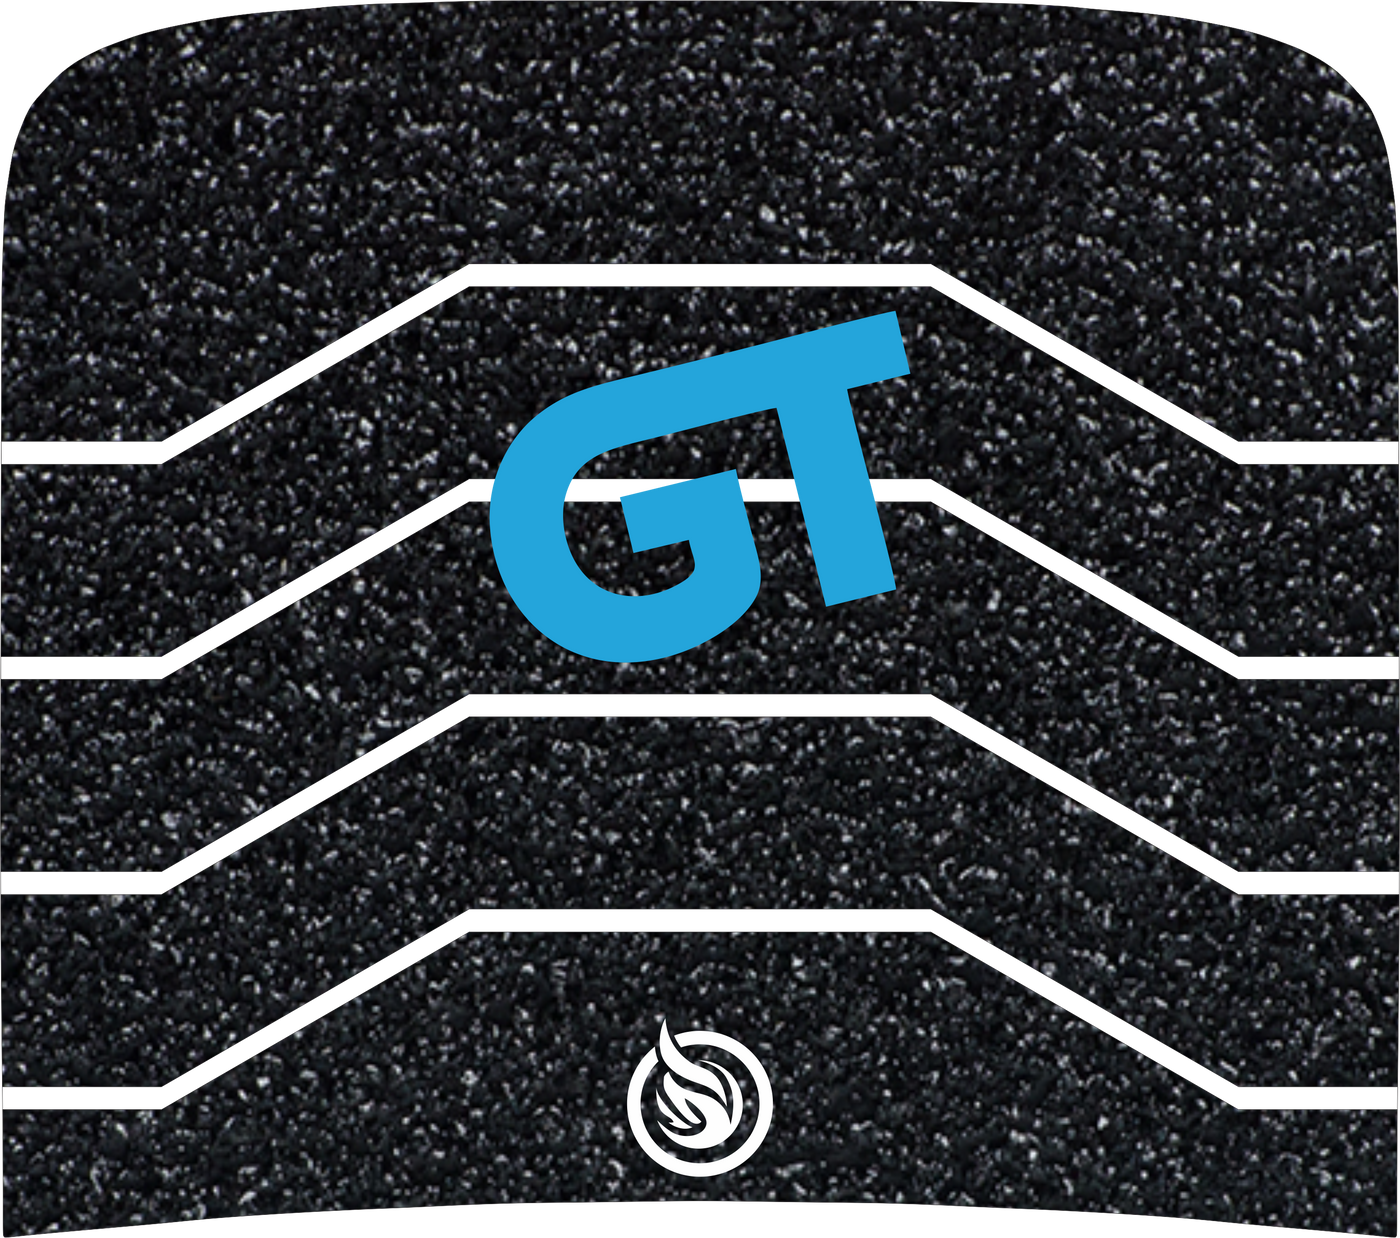 Retro Tread 1WP Ignite Foam Grip Tape - Onewheel GT-S and Onewheel GT Compatible